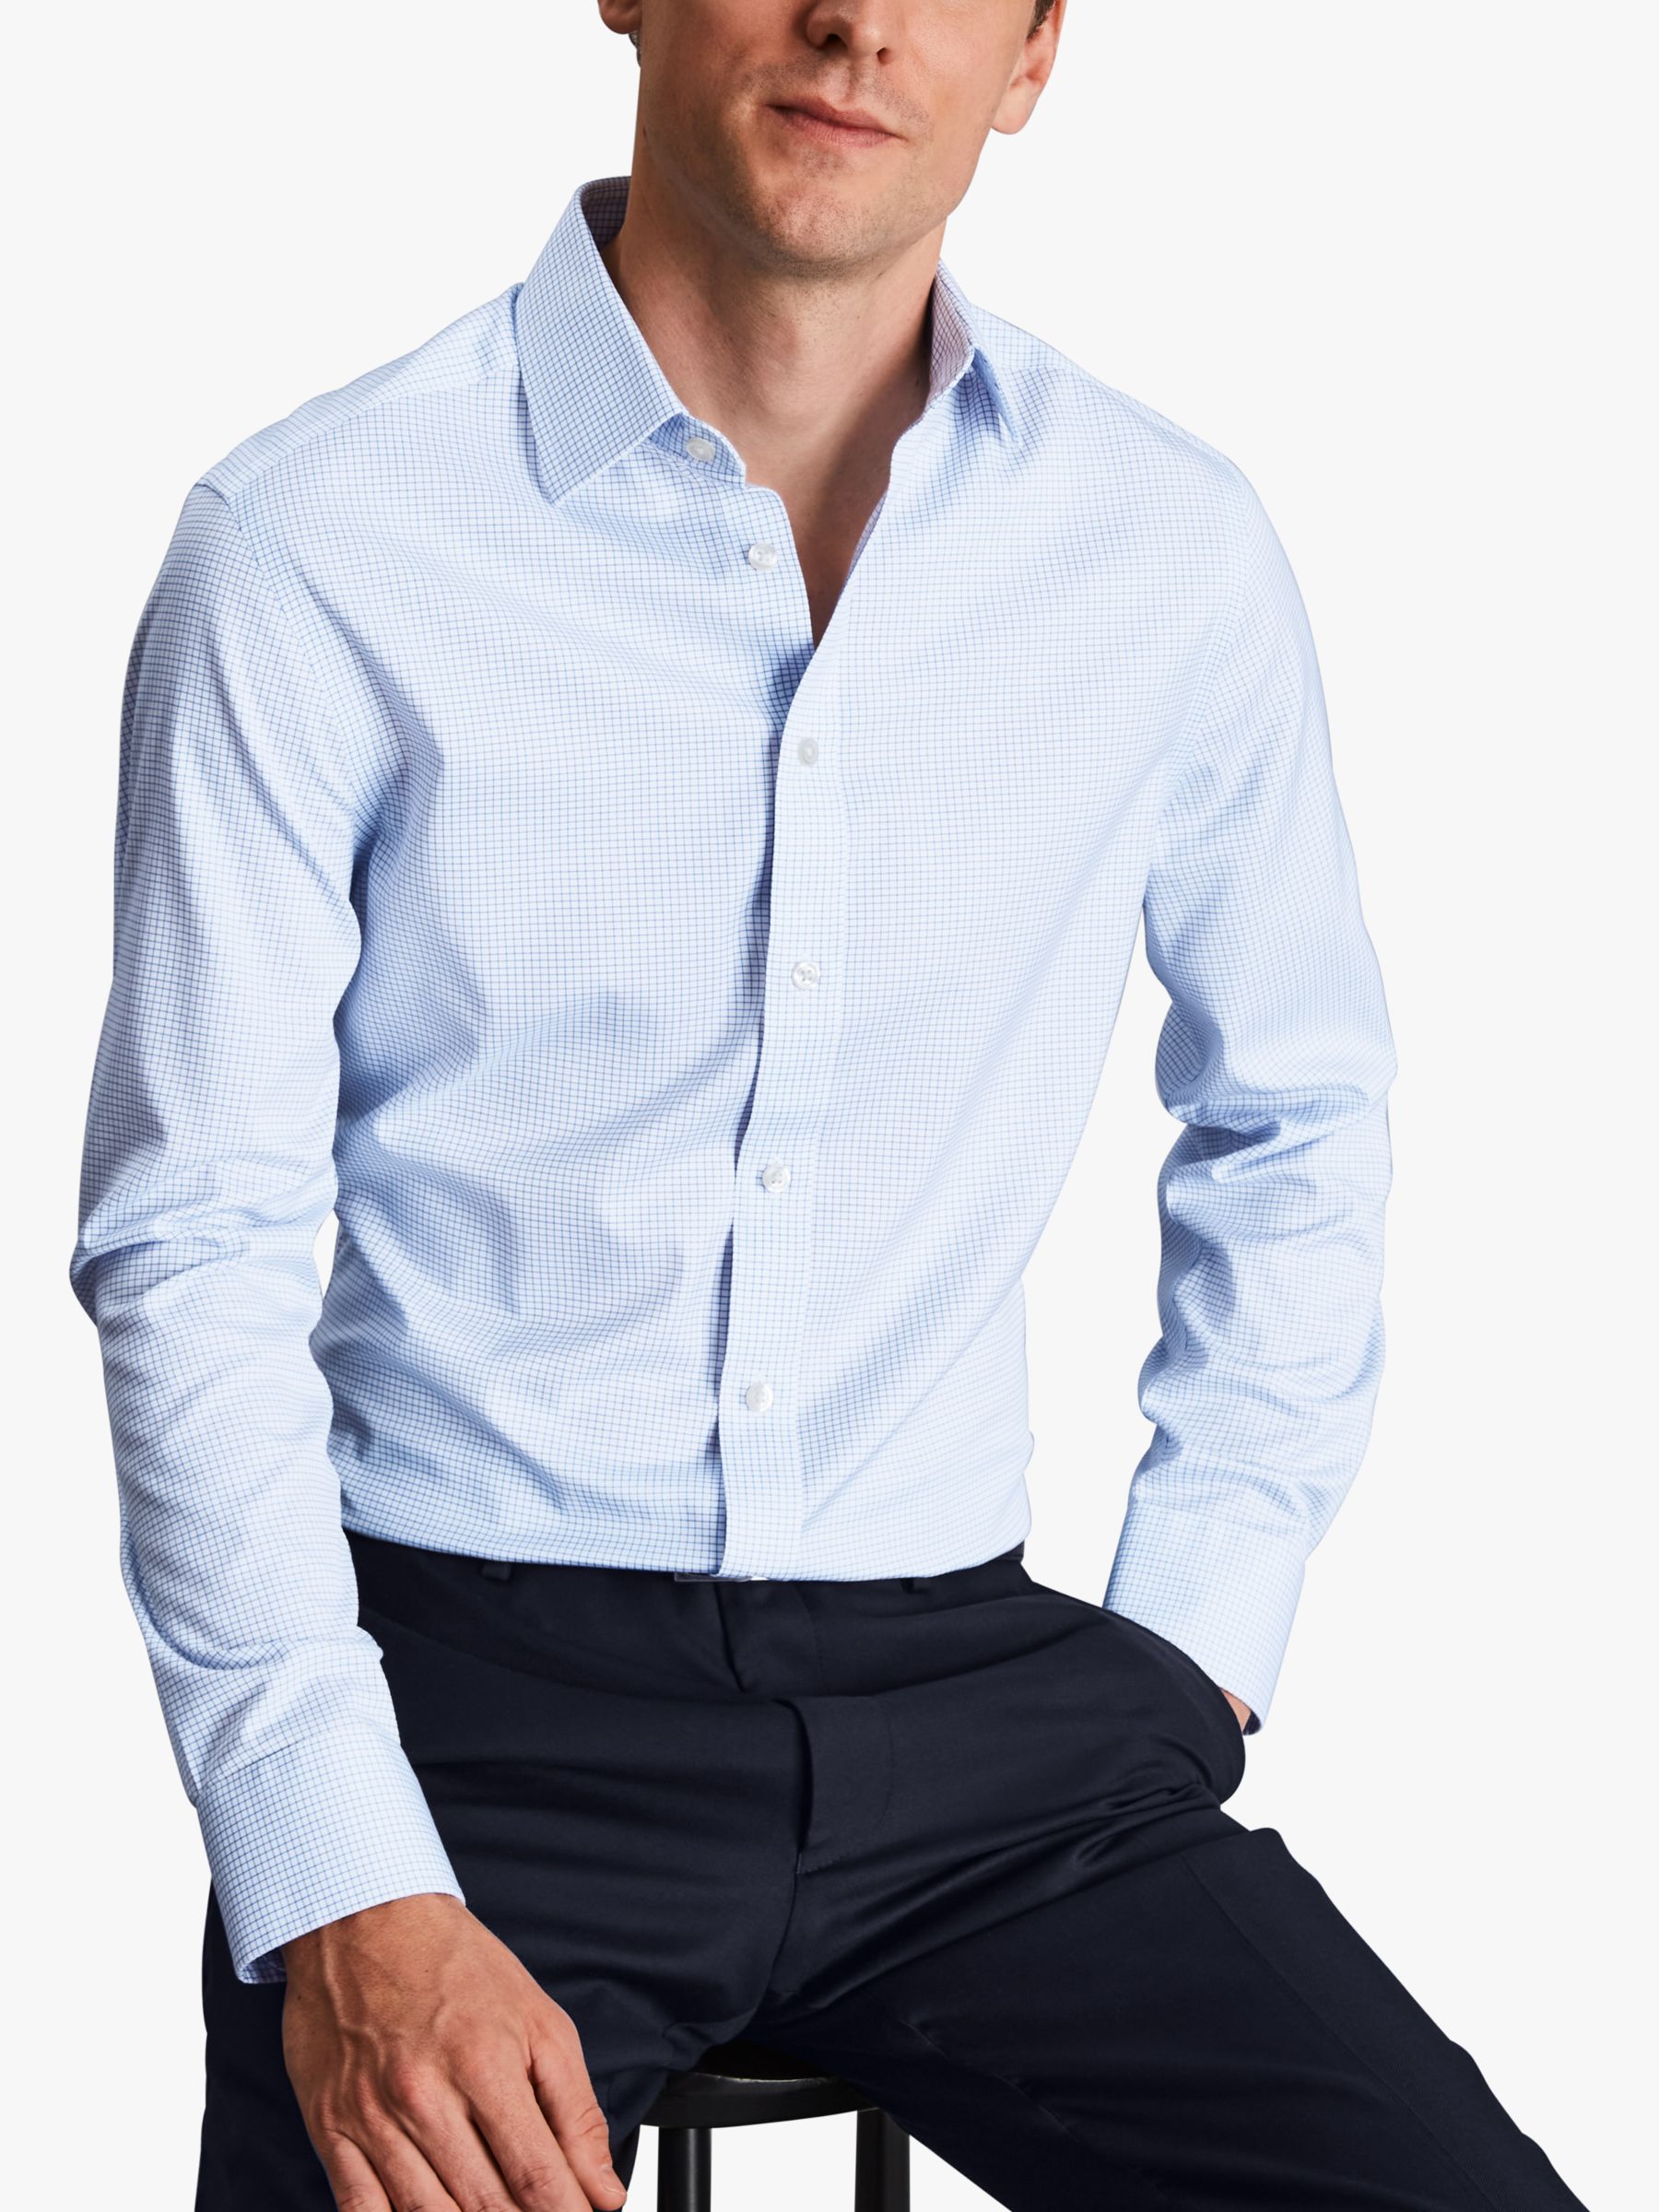 Charles Tyrwhitt Classic Collar Non-Iron Twill Mini Grid Slim Fit Shirt ...